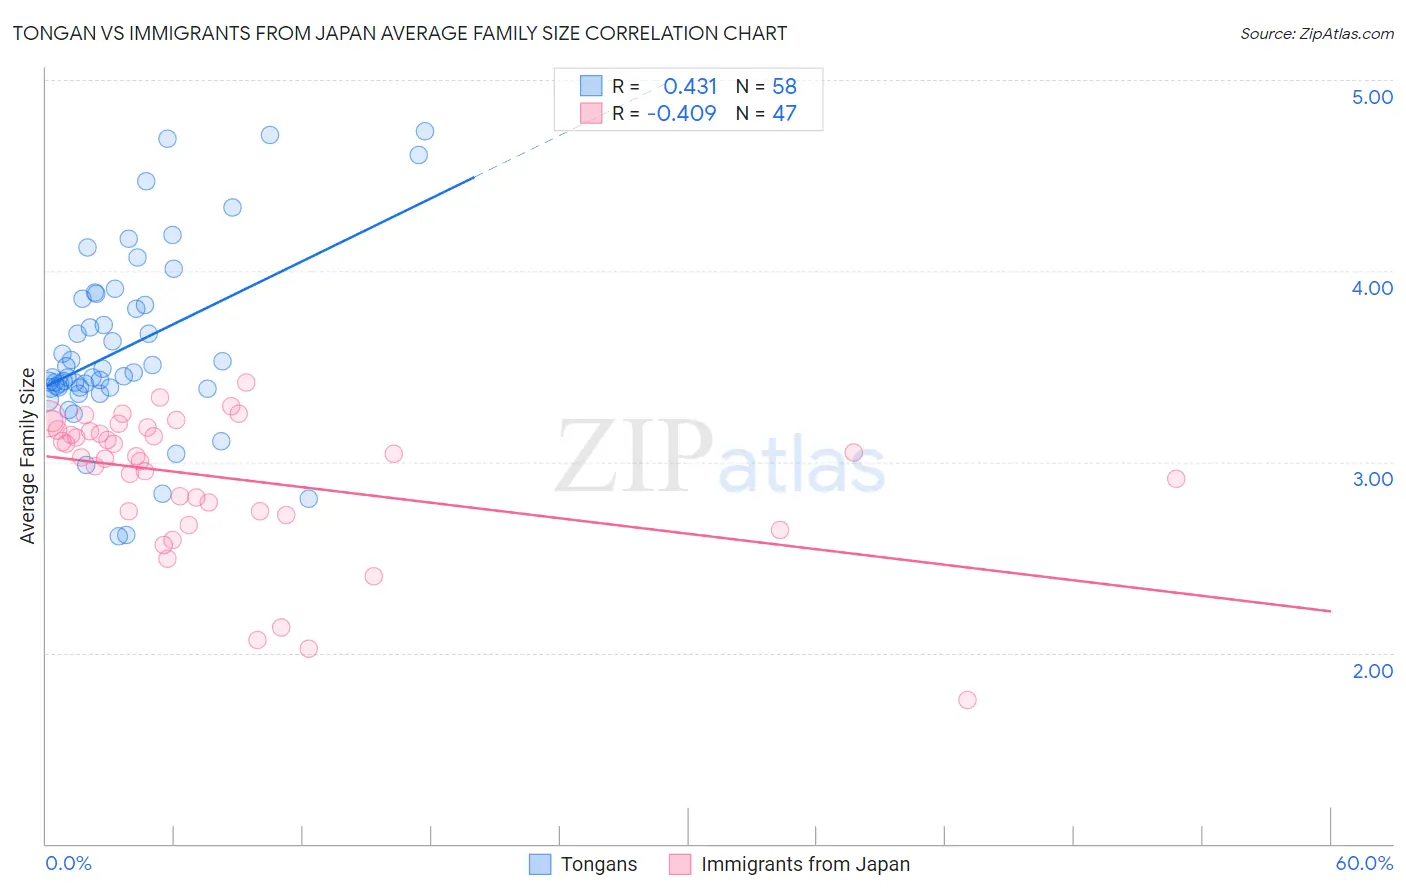 Tongan vs Immigrants from Japan Average Family Size